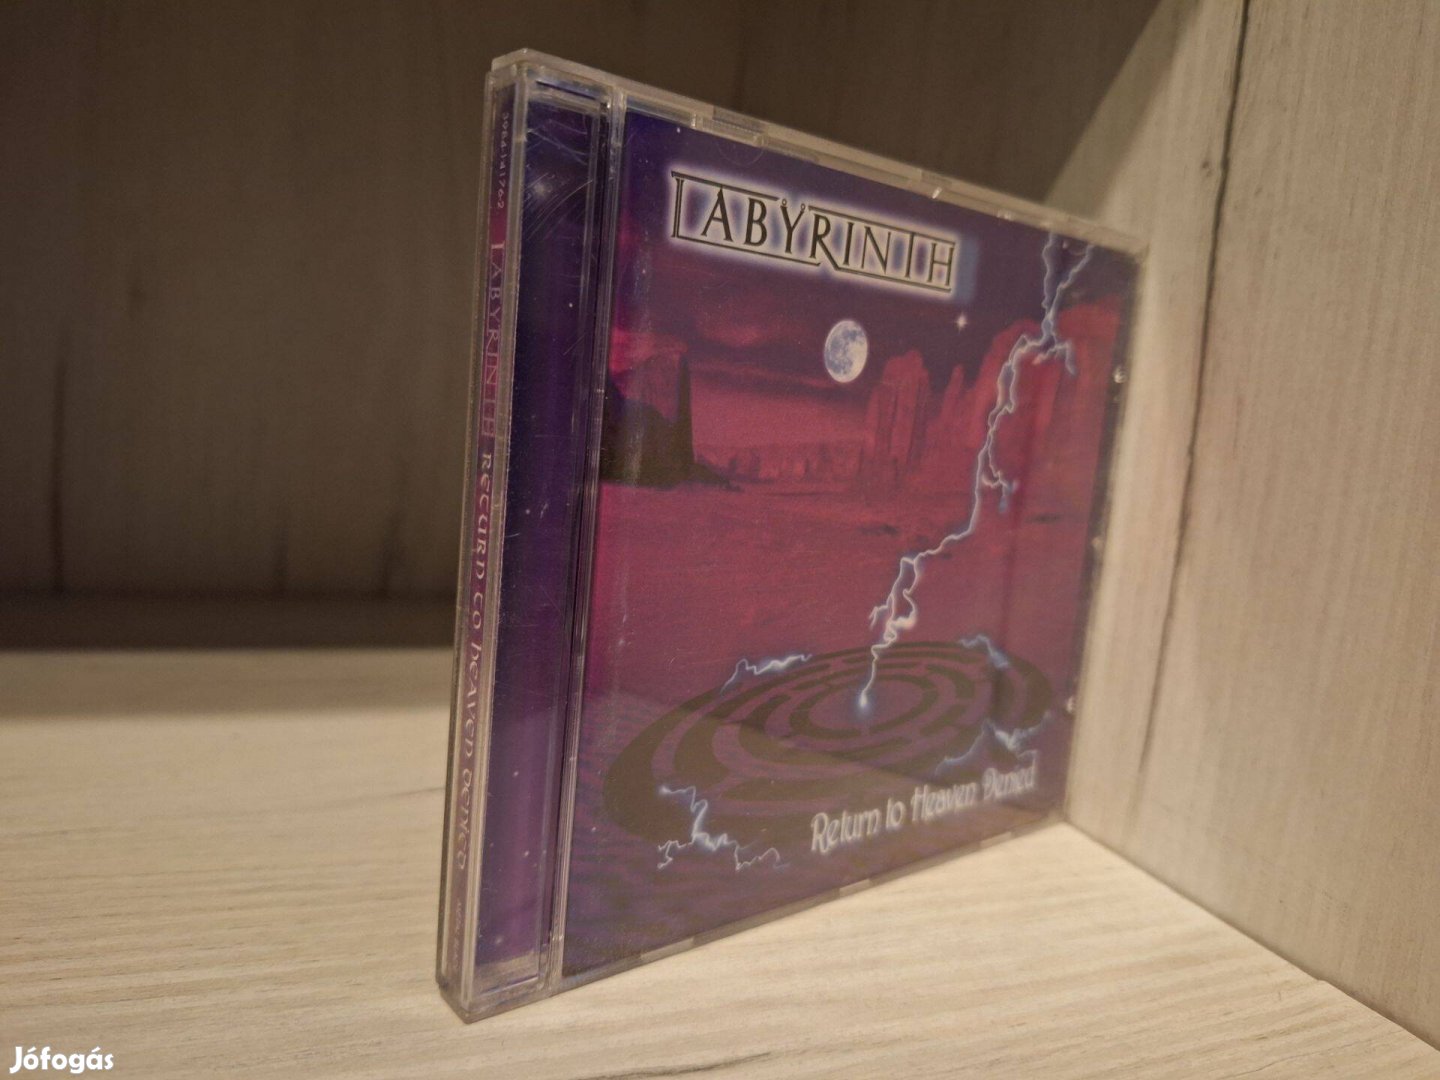 Labyrinth - Return To Heaven Denied CD